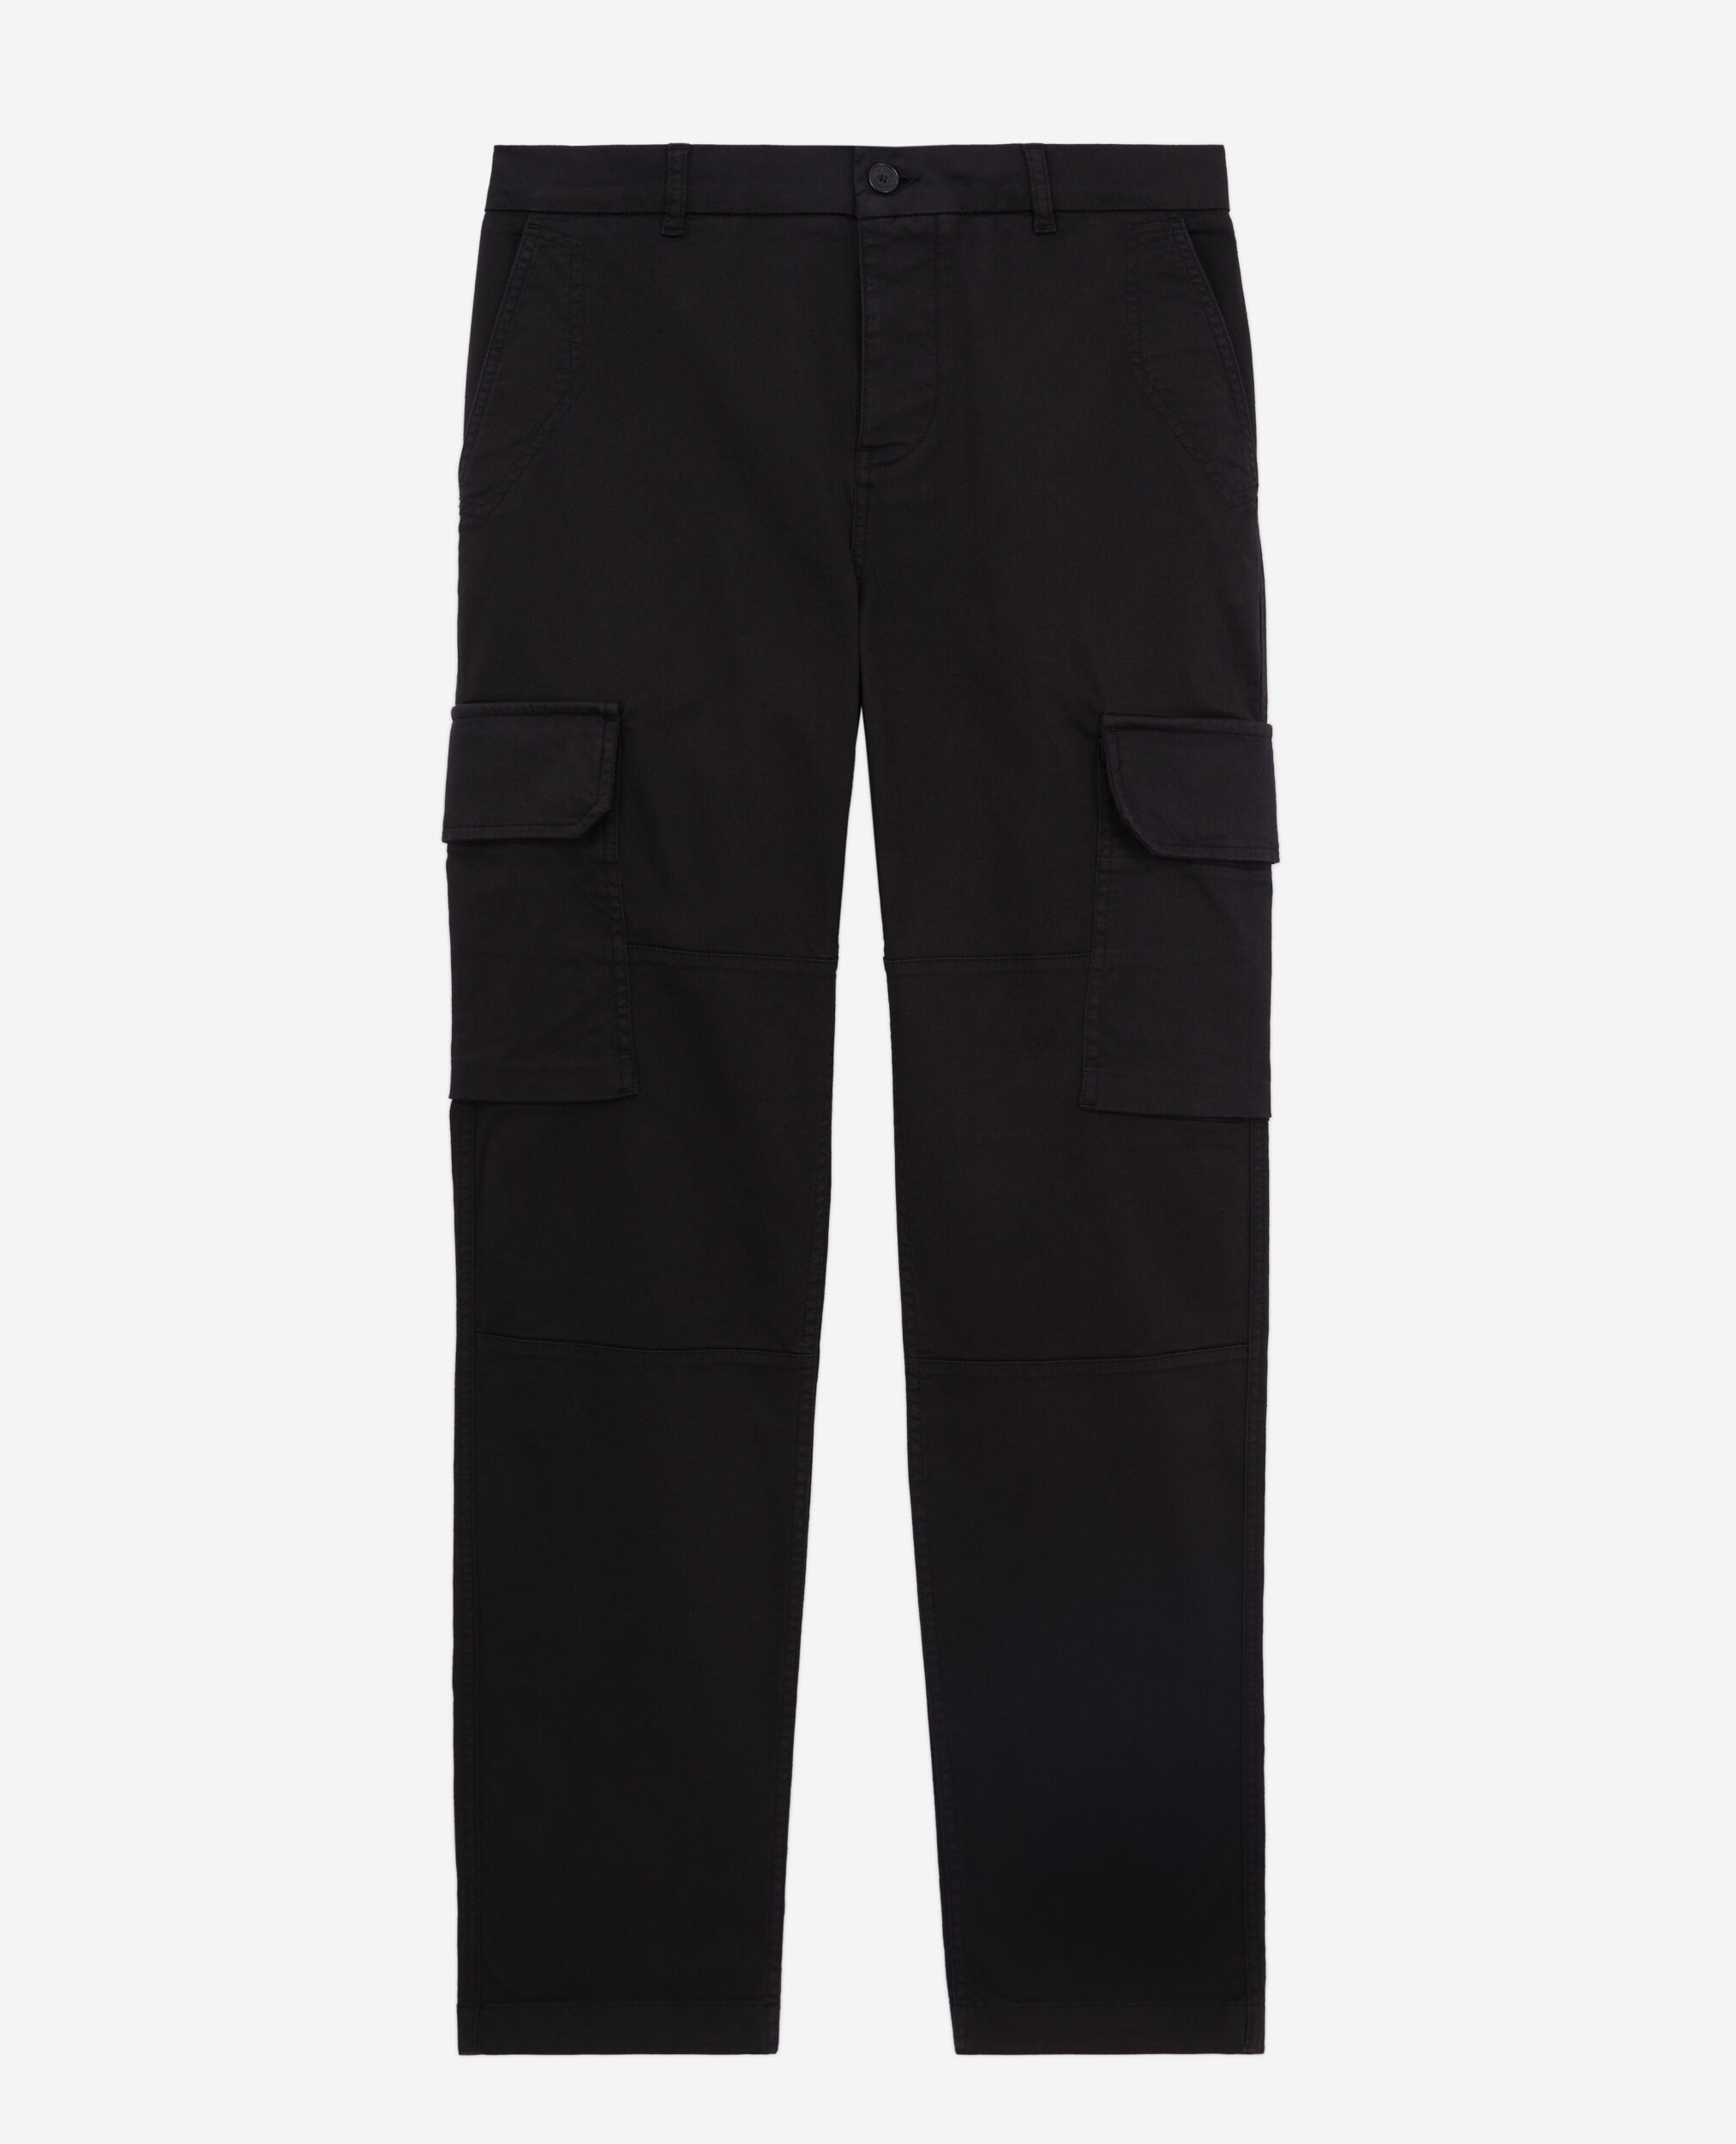 Black cargo pants, BLACK, hi-res image number null